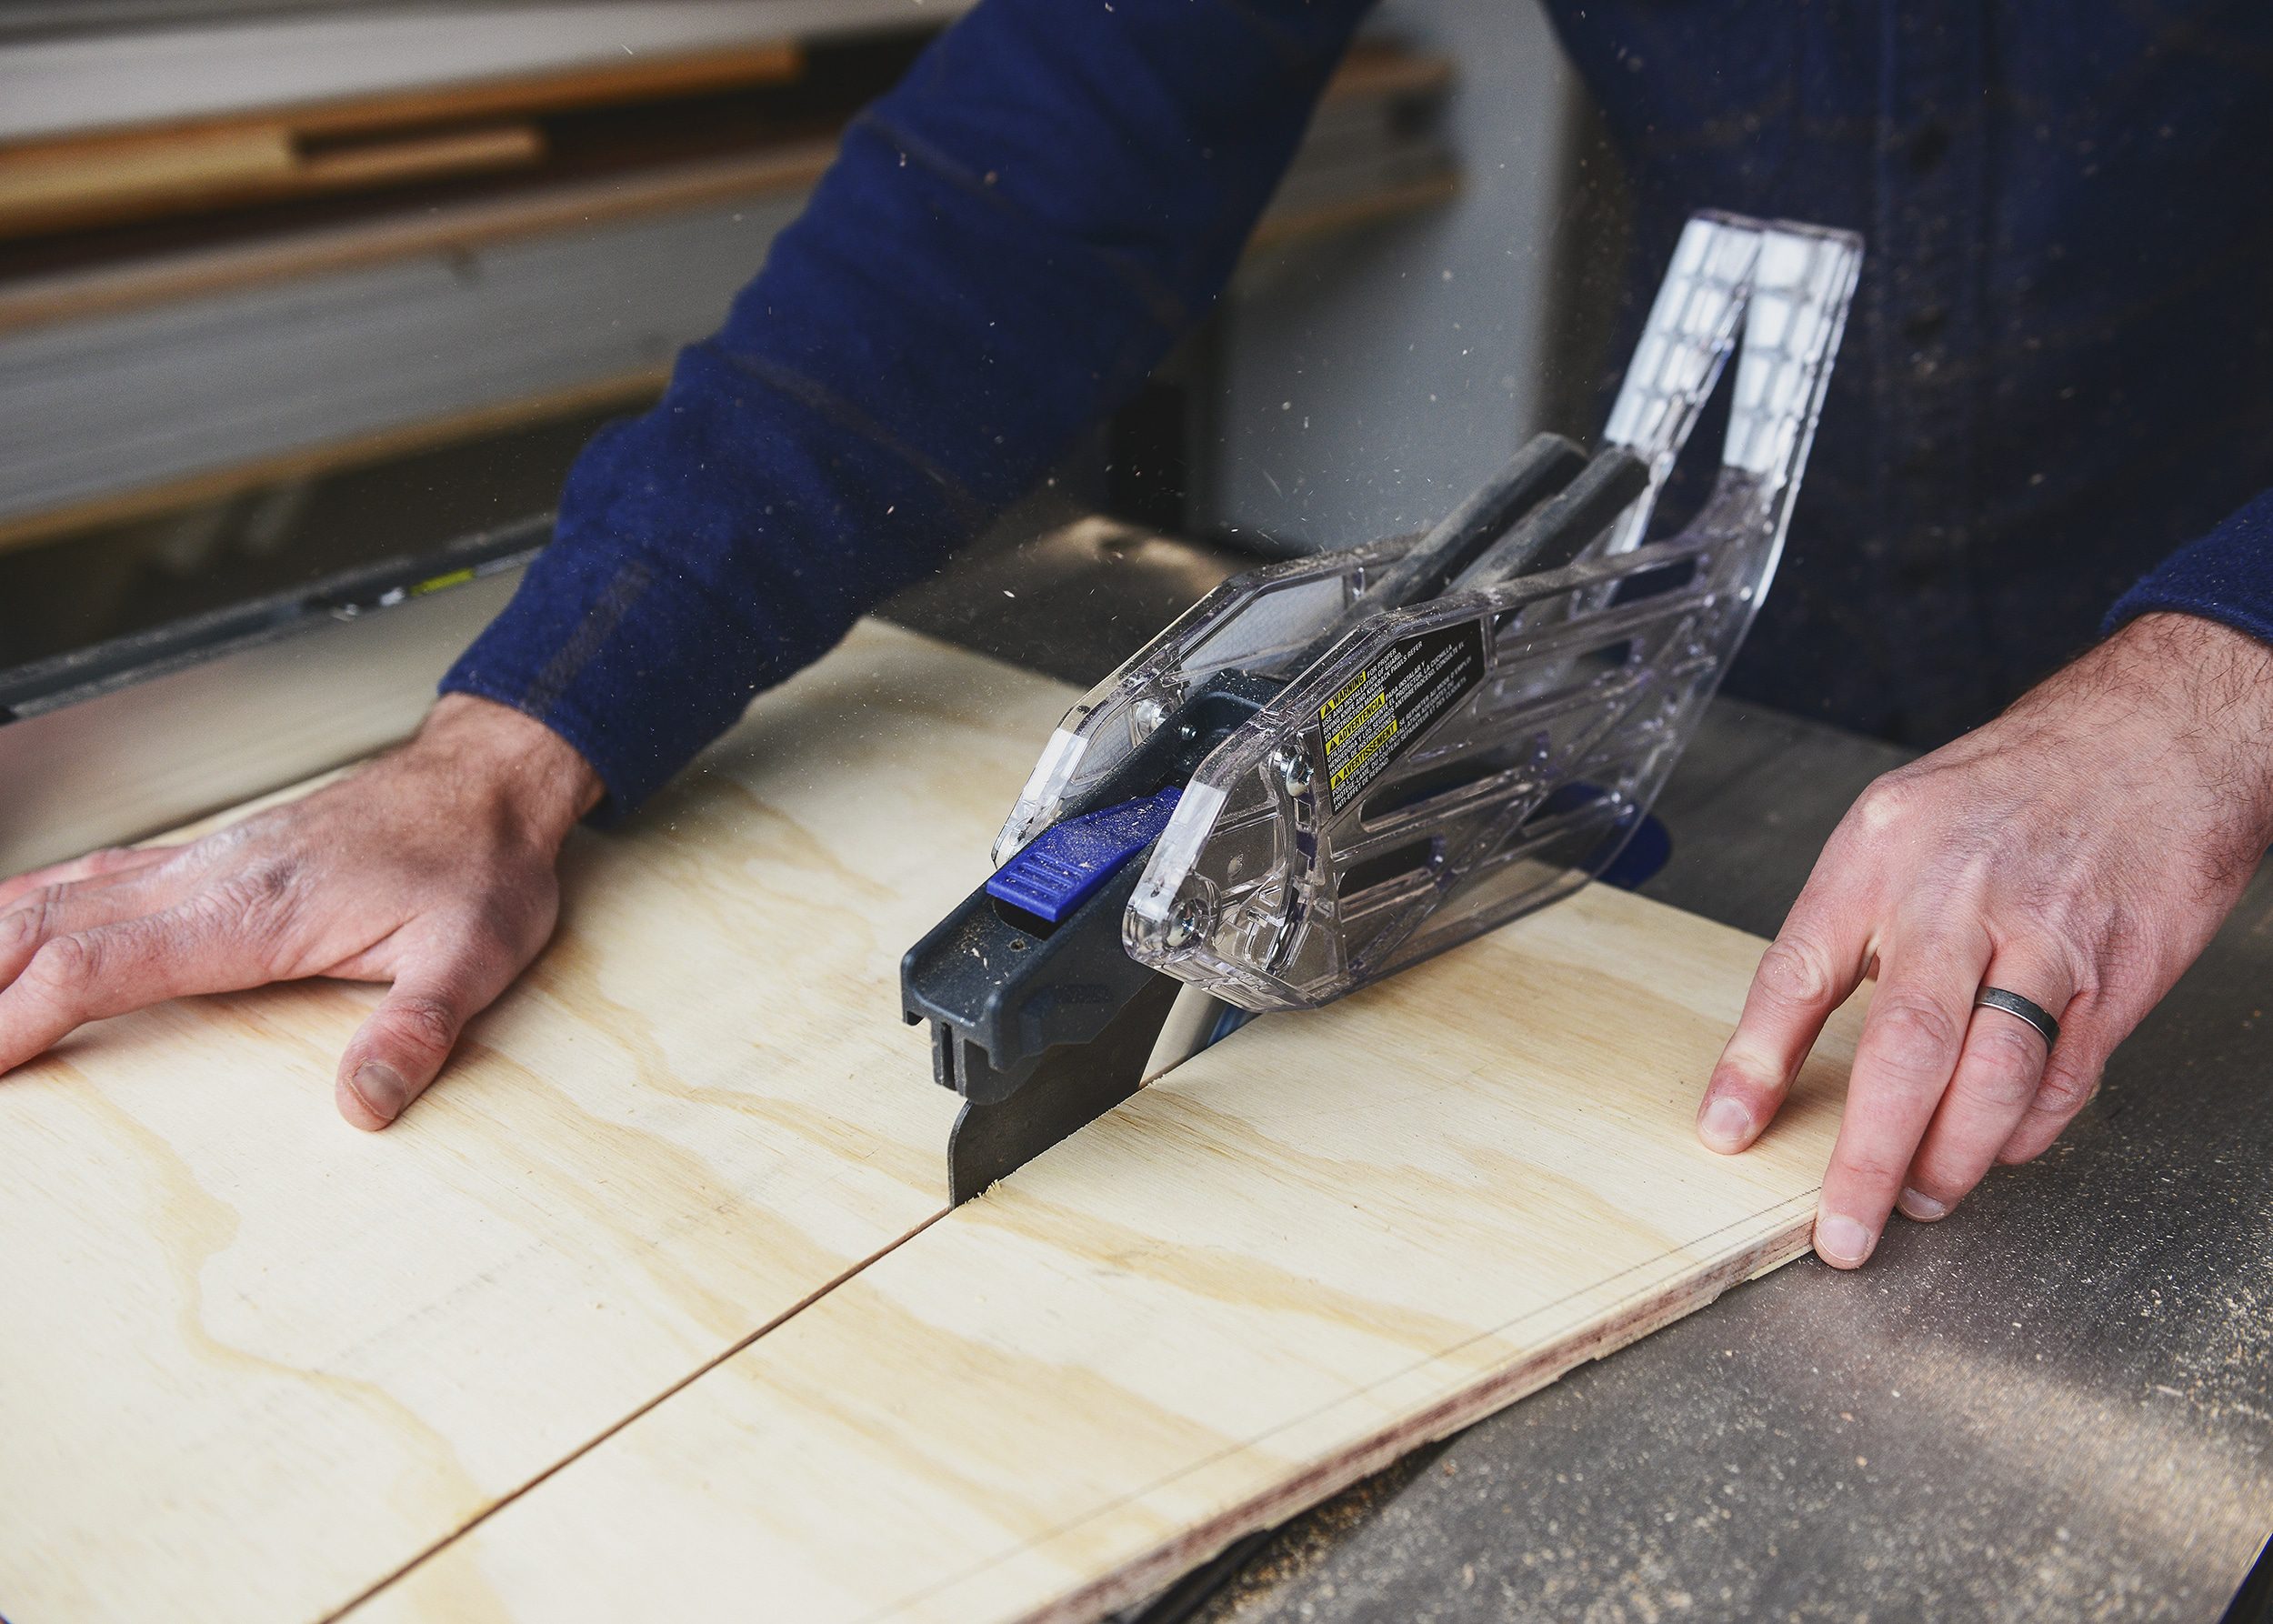 A table saw is used to cut plywood for a DIY bat box // How-to build a bat box, DIY bat box via Yellow Brick Home